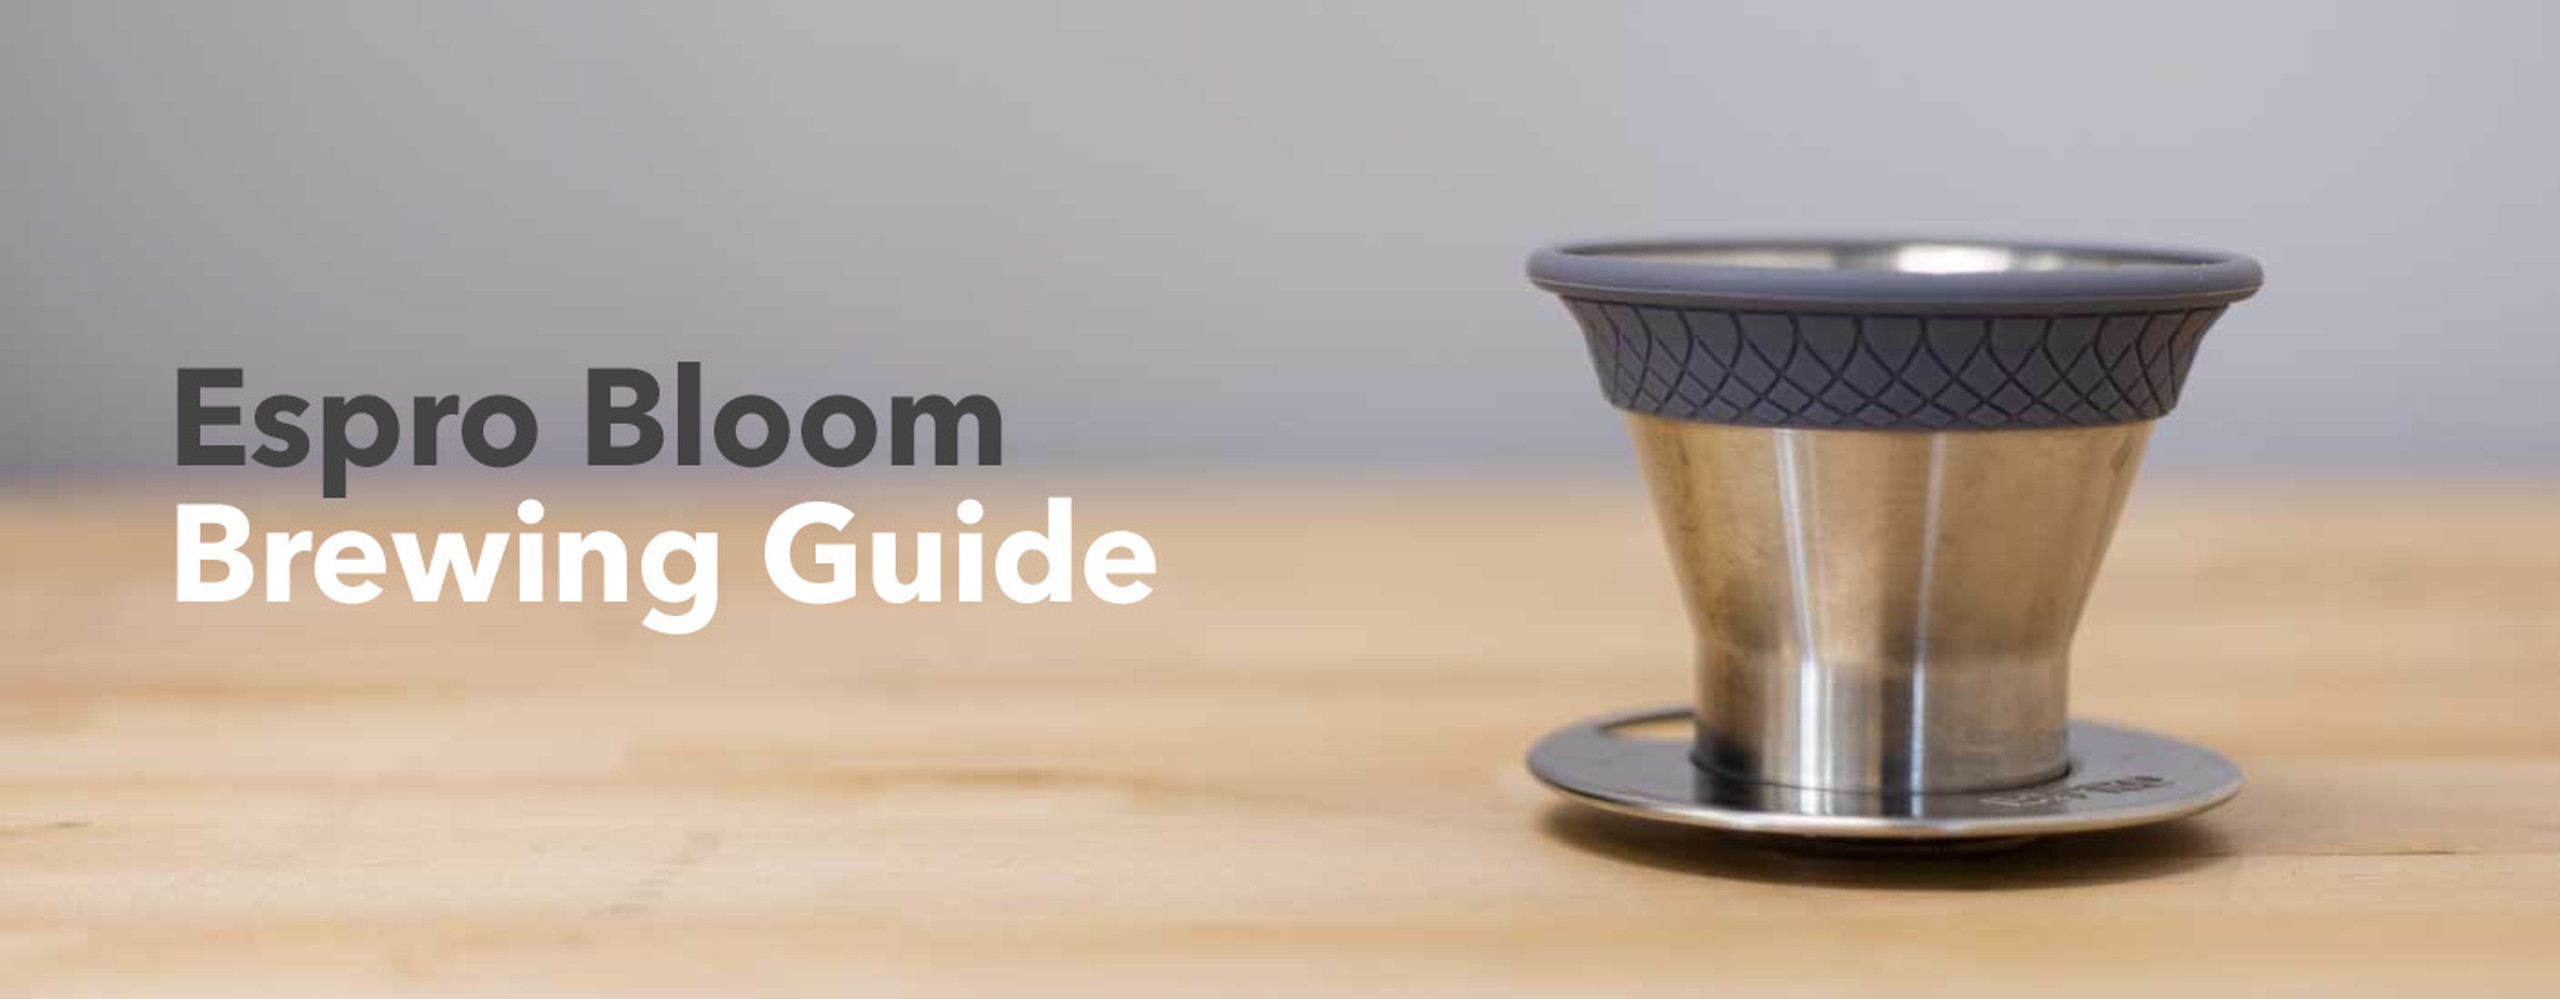 Espro Bloom Brewing Guide